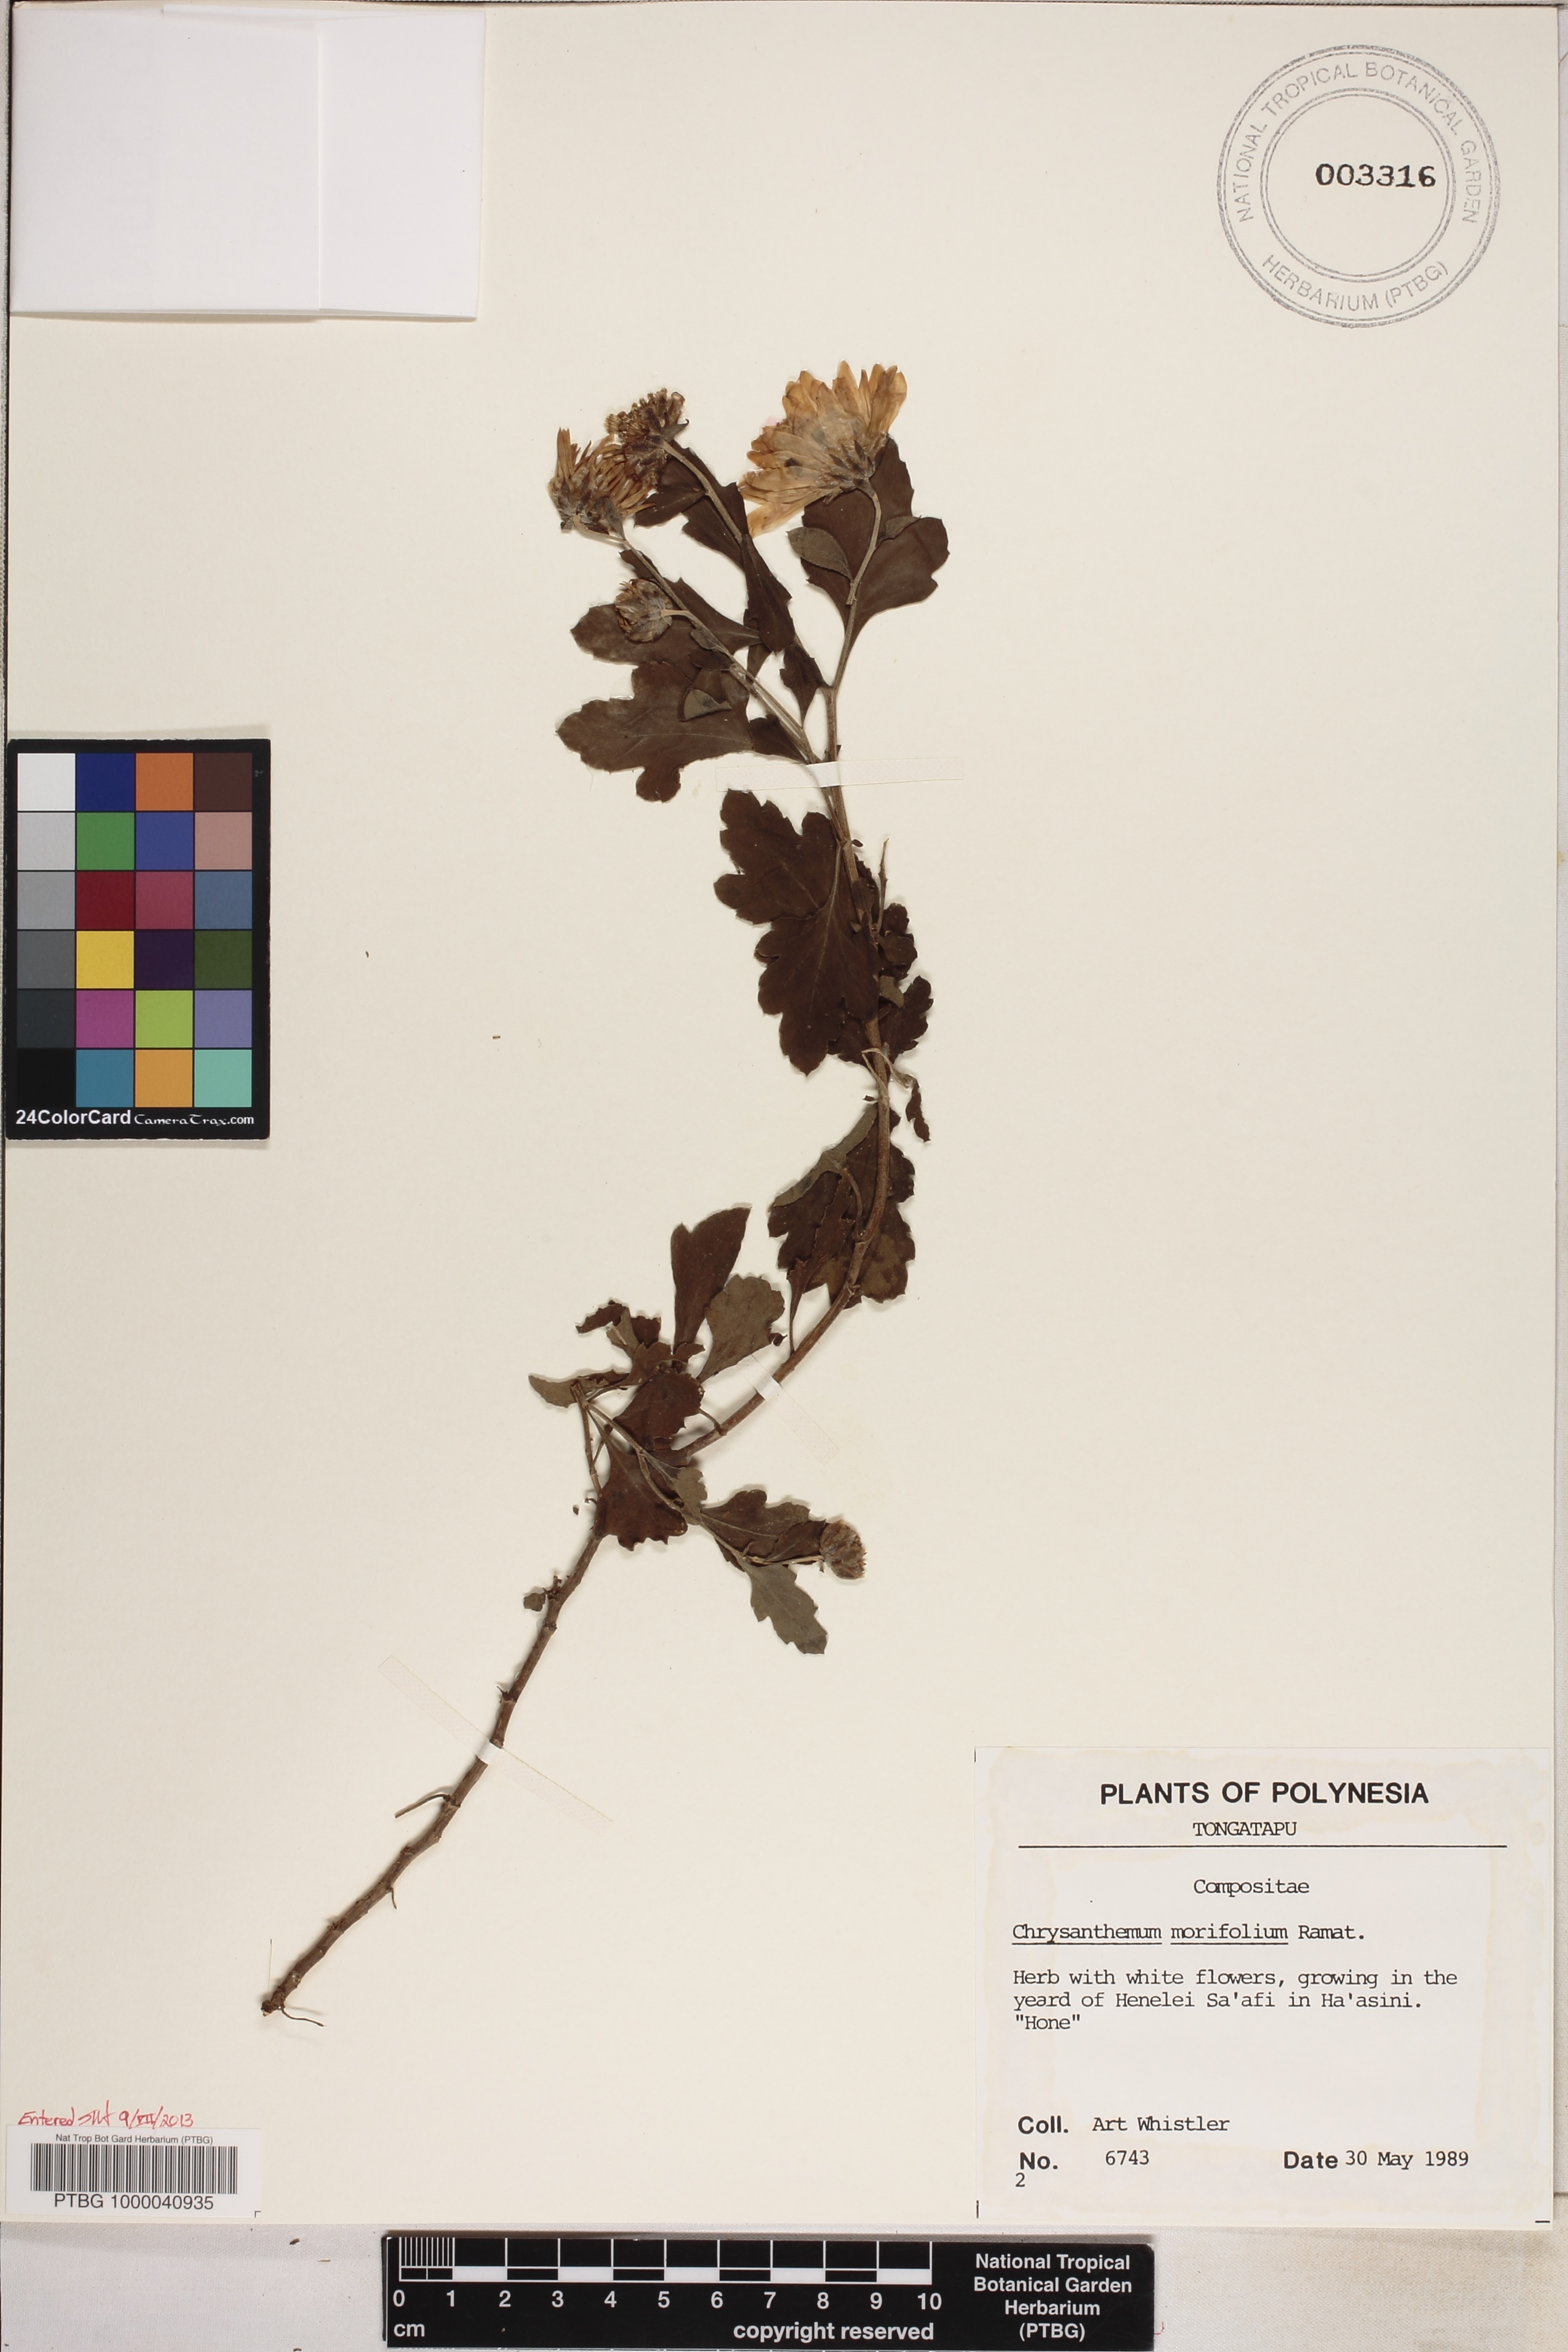 Chrysanthemum X morifolium image